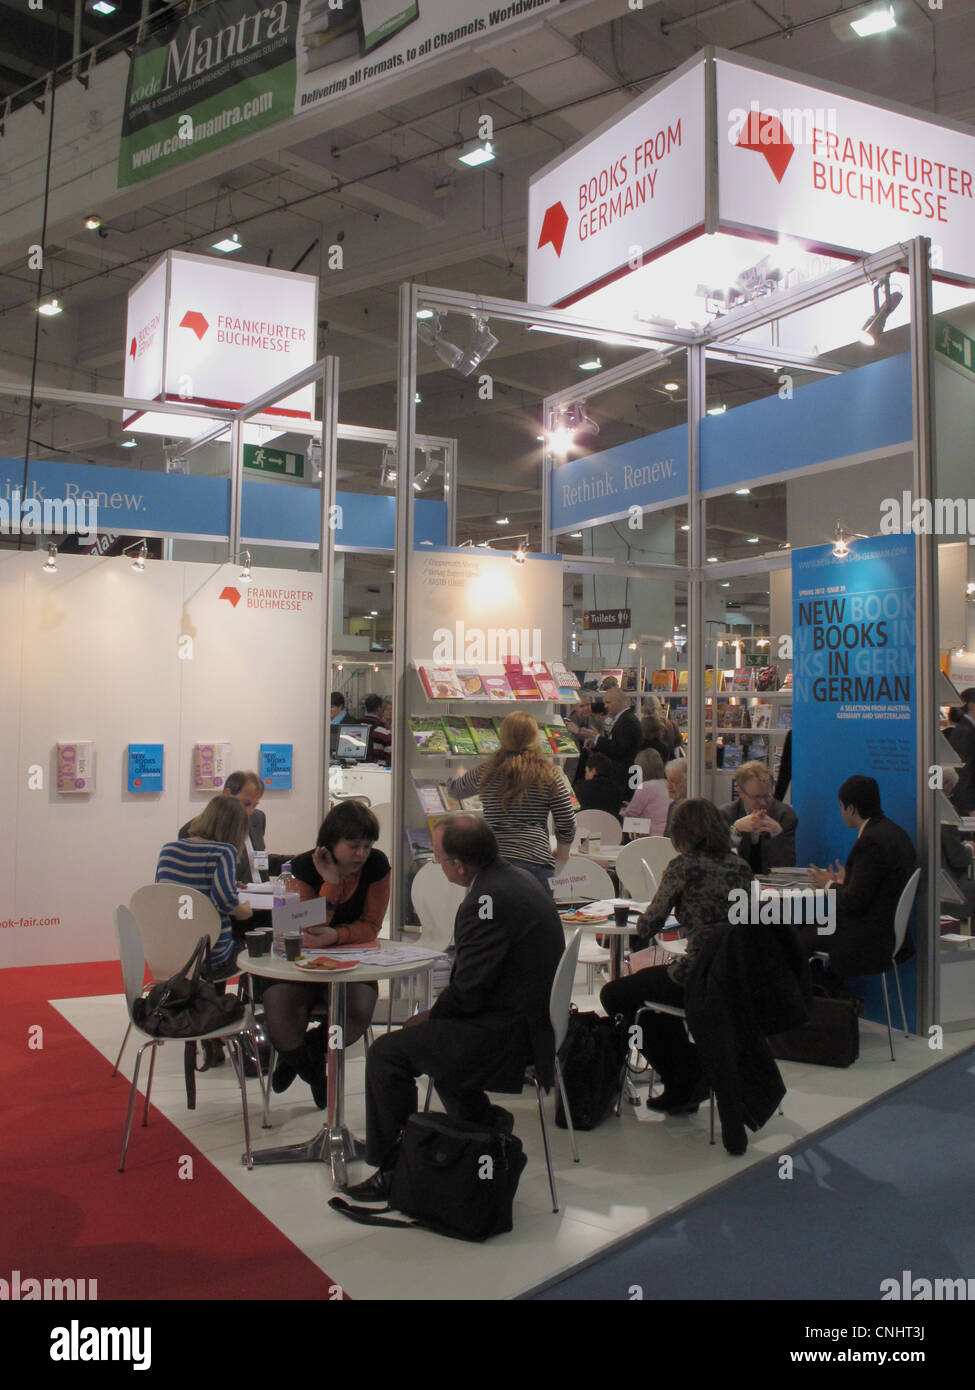 German and Frankfurt Buchmesse pavilion at the 2012 London International Book Fair, UK Stock Photo